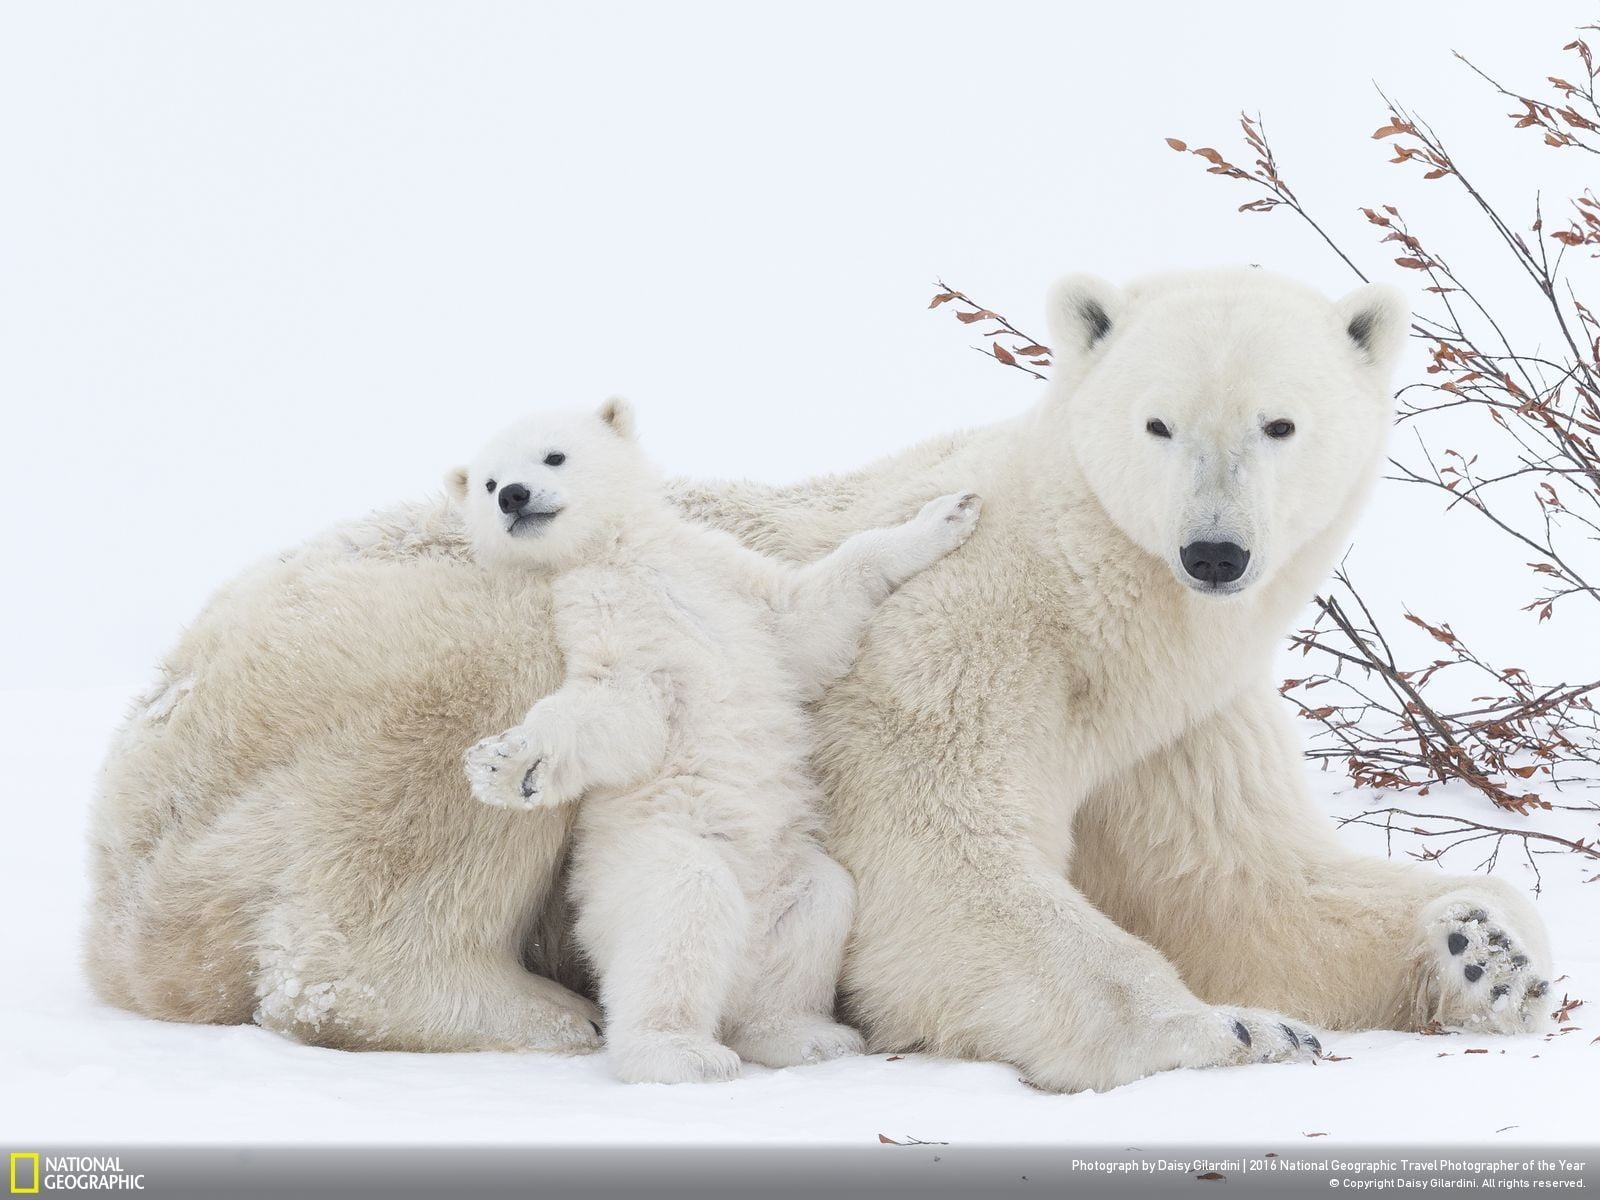 two white polar bears, animals, National Geographic, polar bears, snow